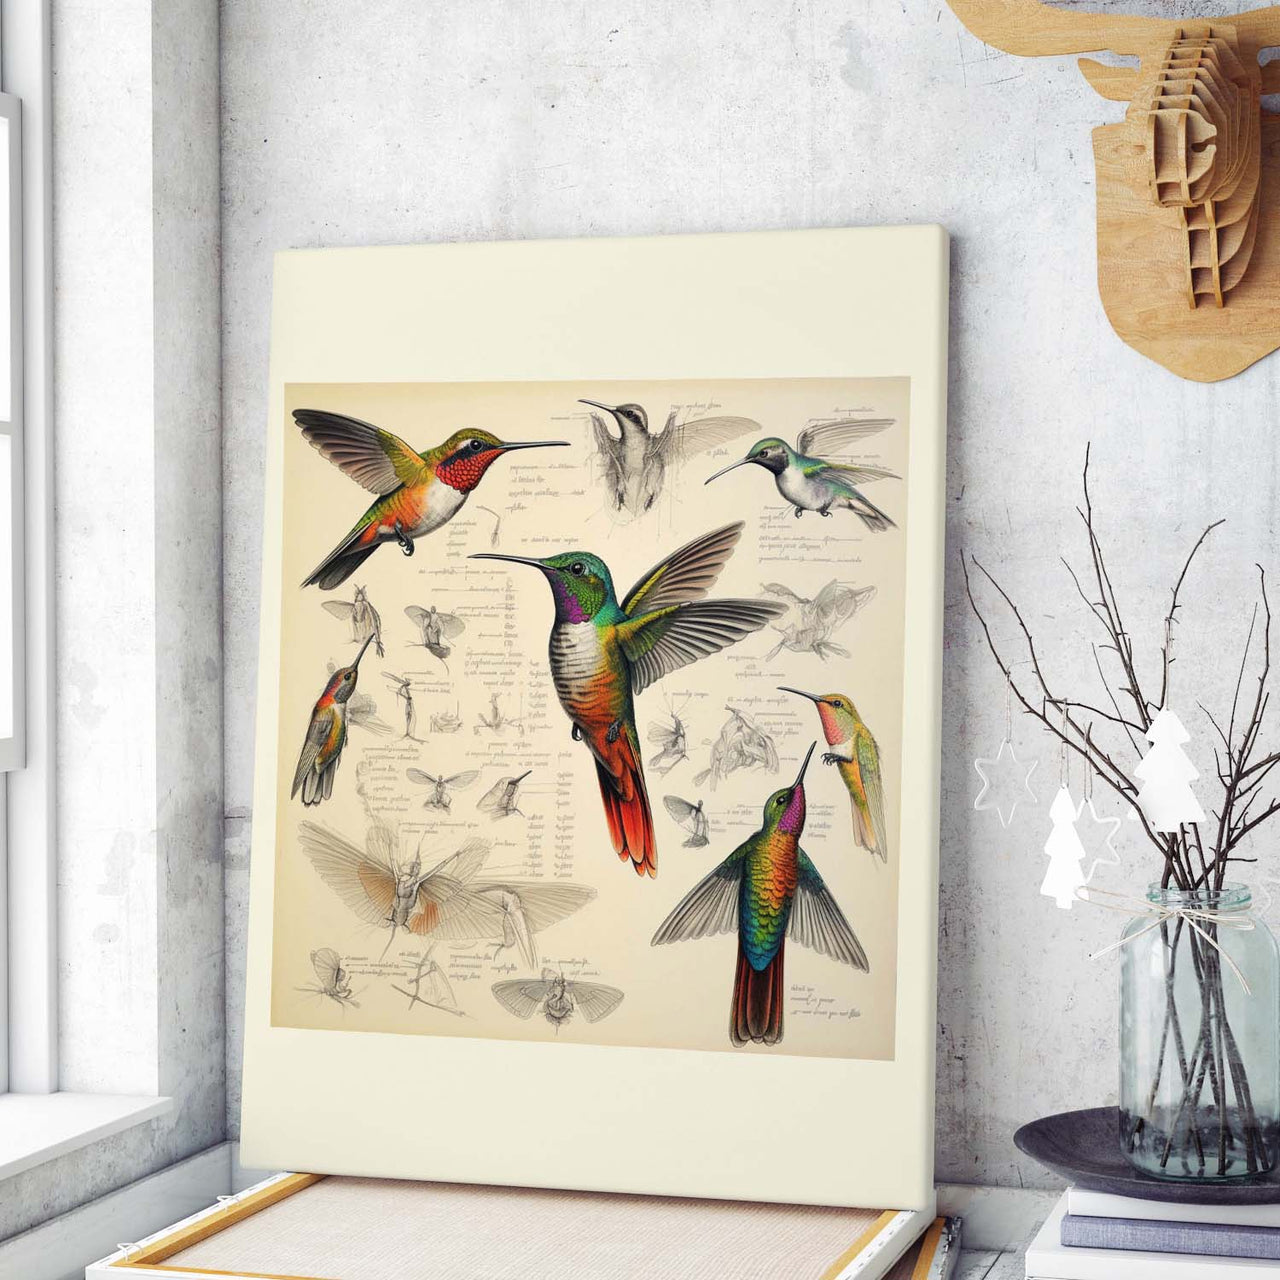 Drawings Hummingbirds 08 Da Vinci Style Vintage Framed Canvas Prints Wall Art Hanging Home Decor